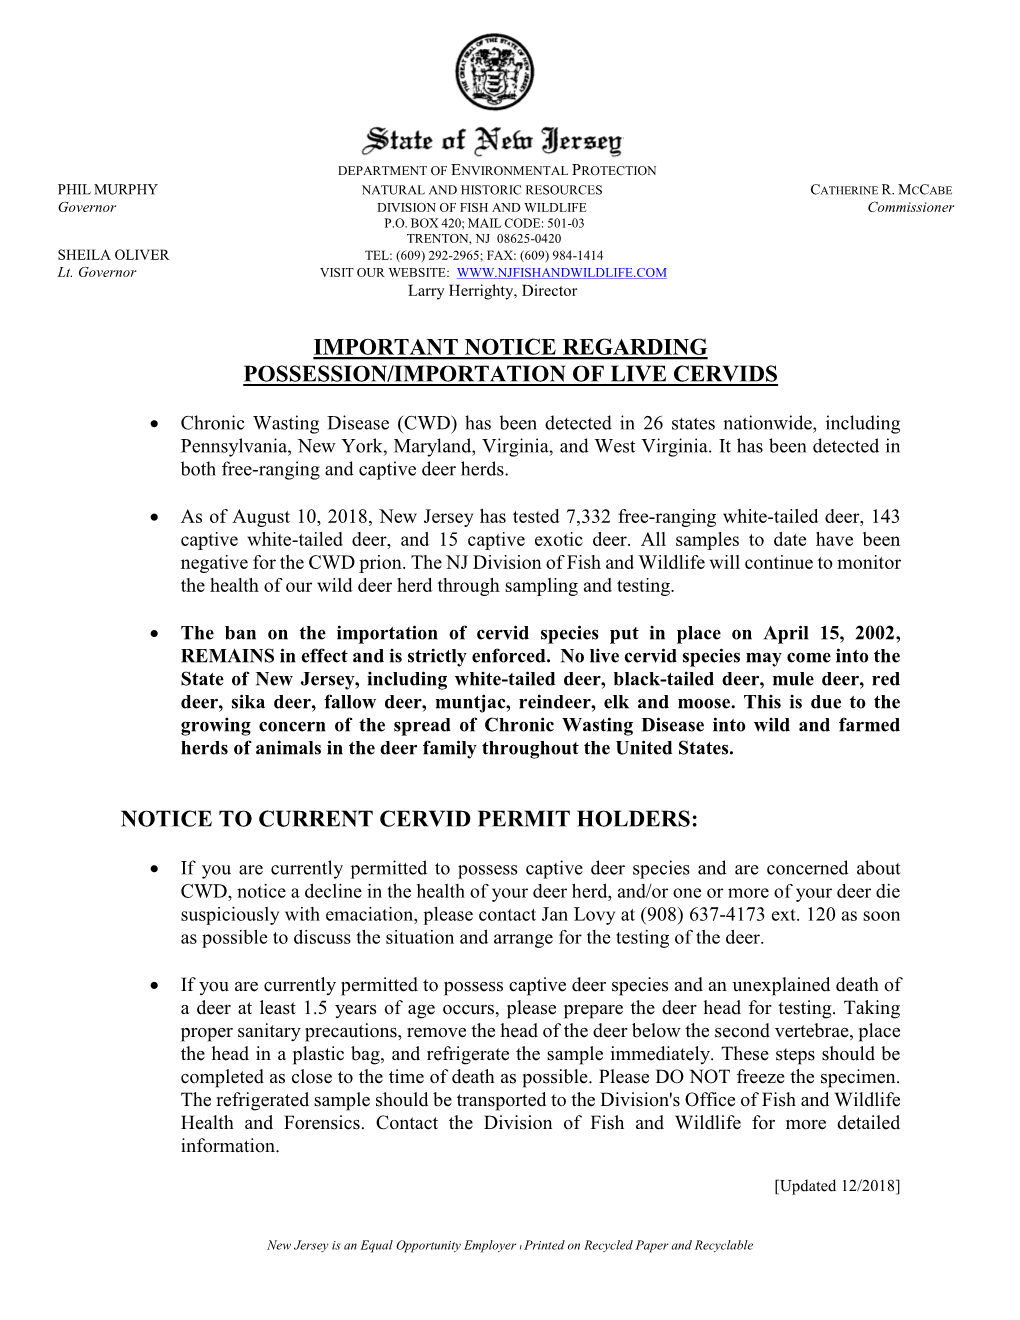 Notice Regarding Possession/Importation of Live Cervids